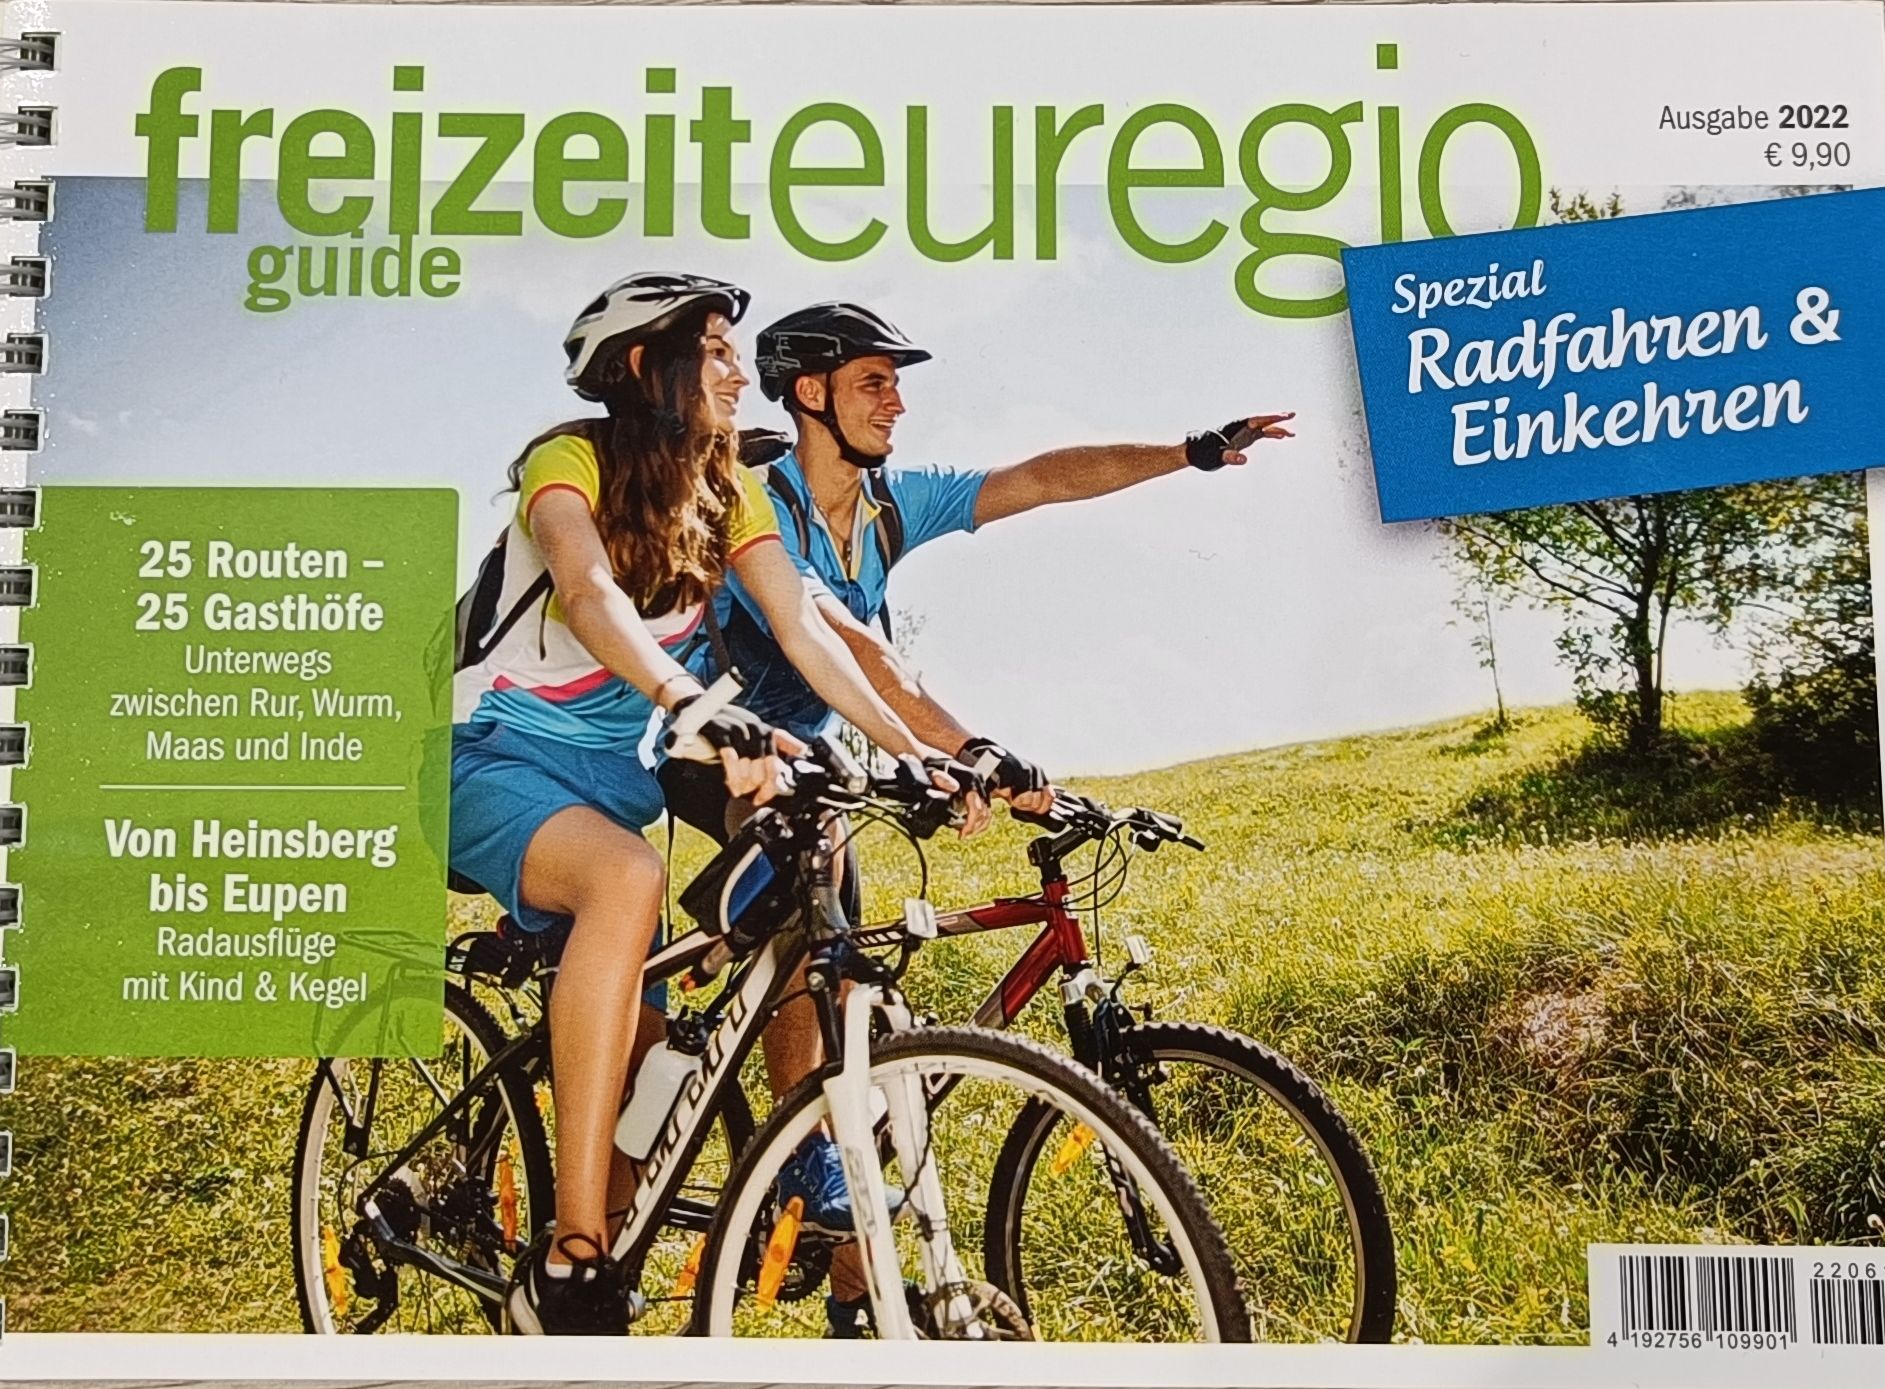 freizeitguide euregio spezial: Radfahren & Einkehren 2022/2023 - Cover